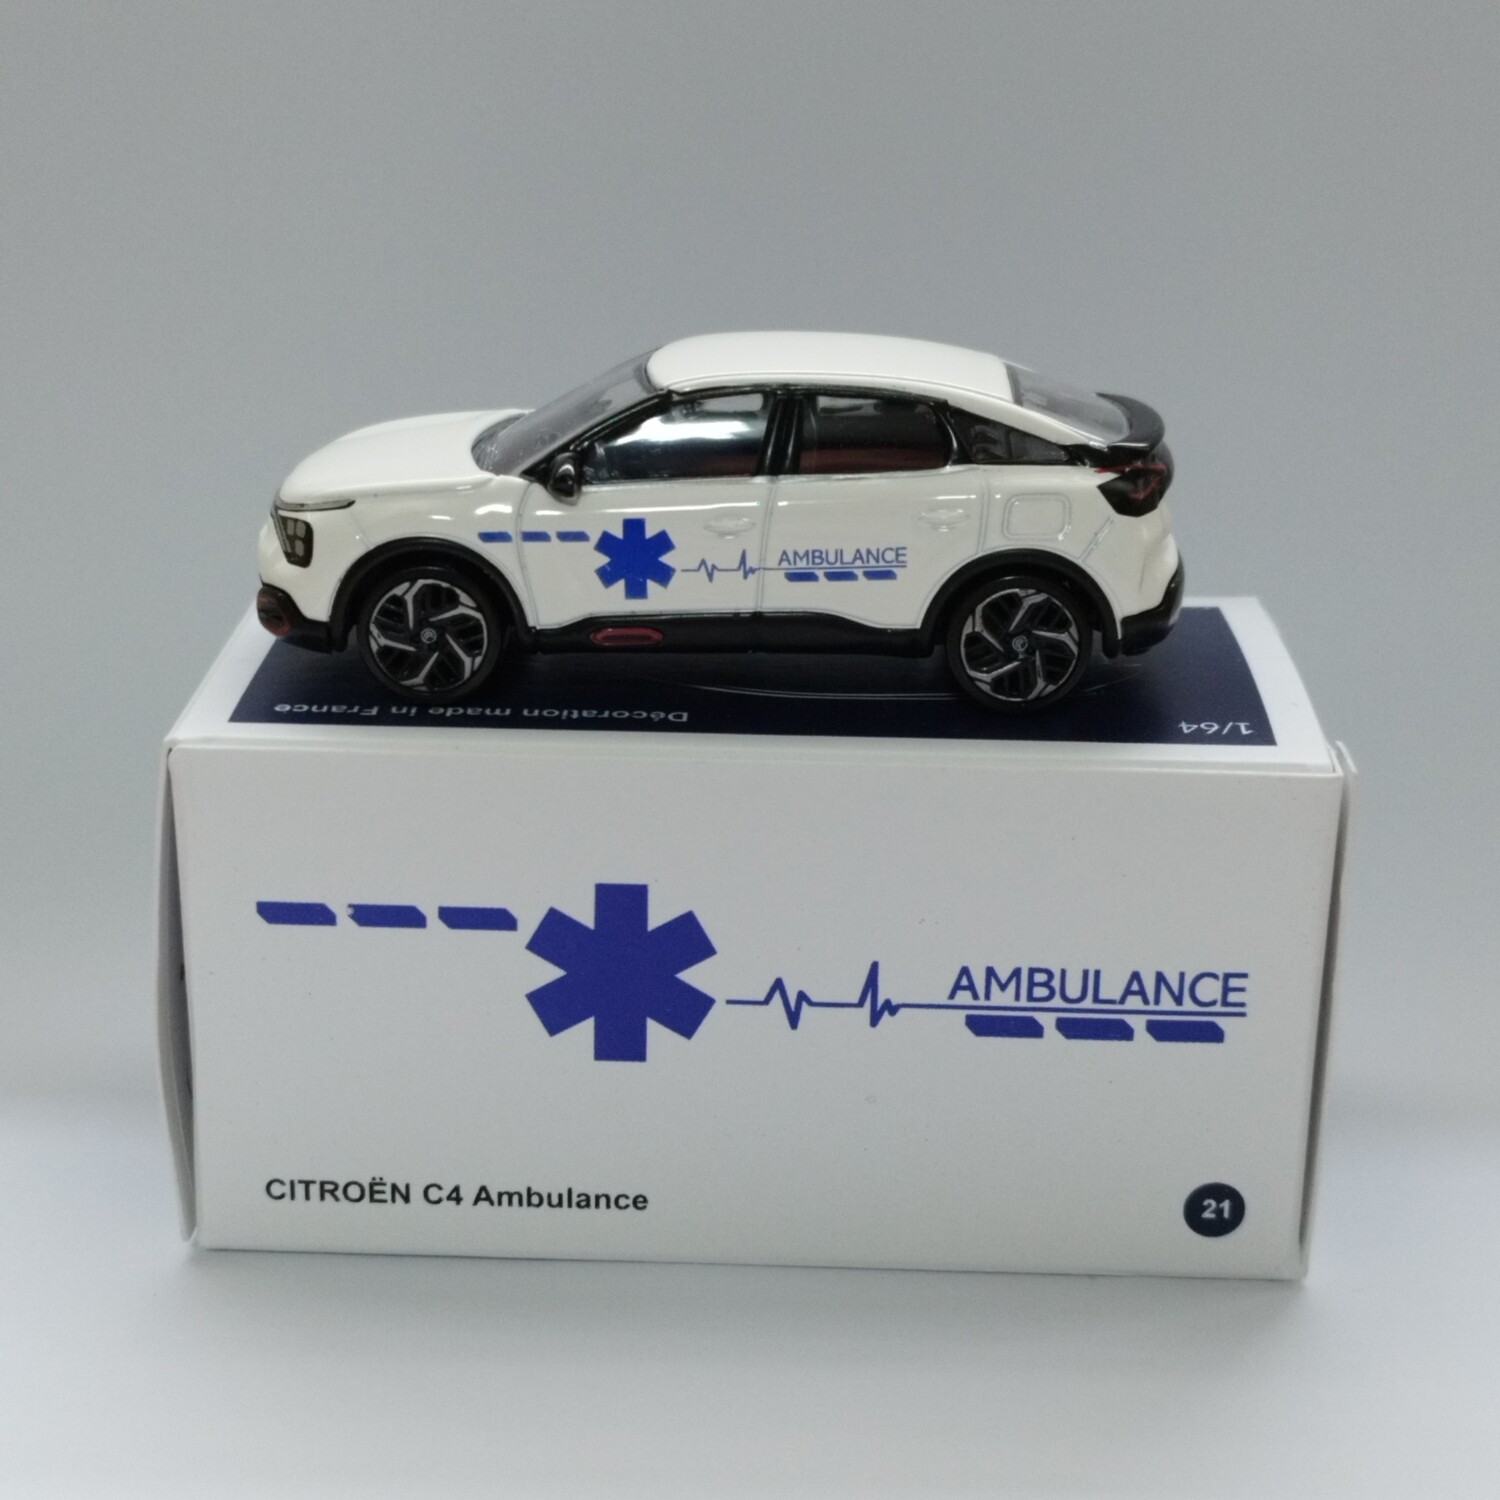 Citroën C4 2020 blanc ambulance